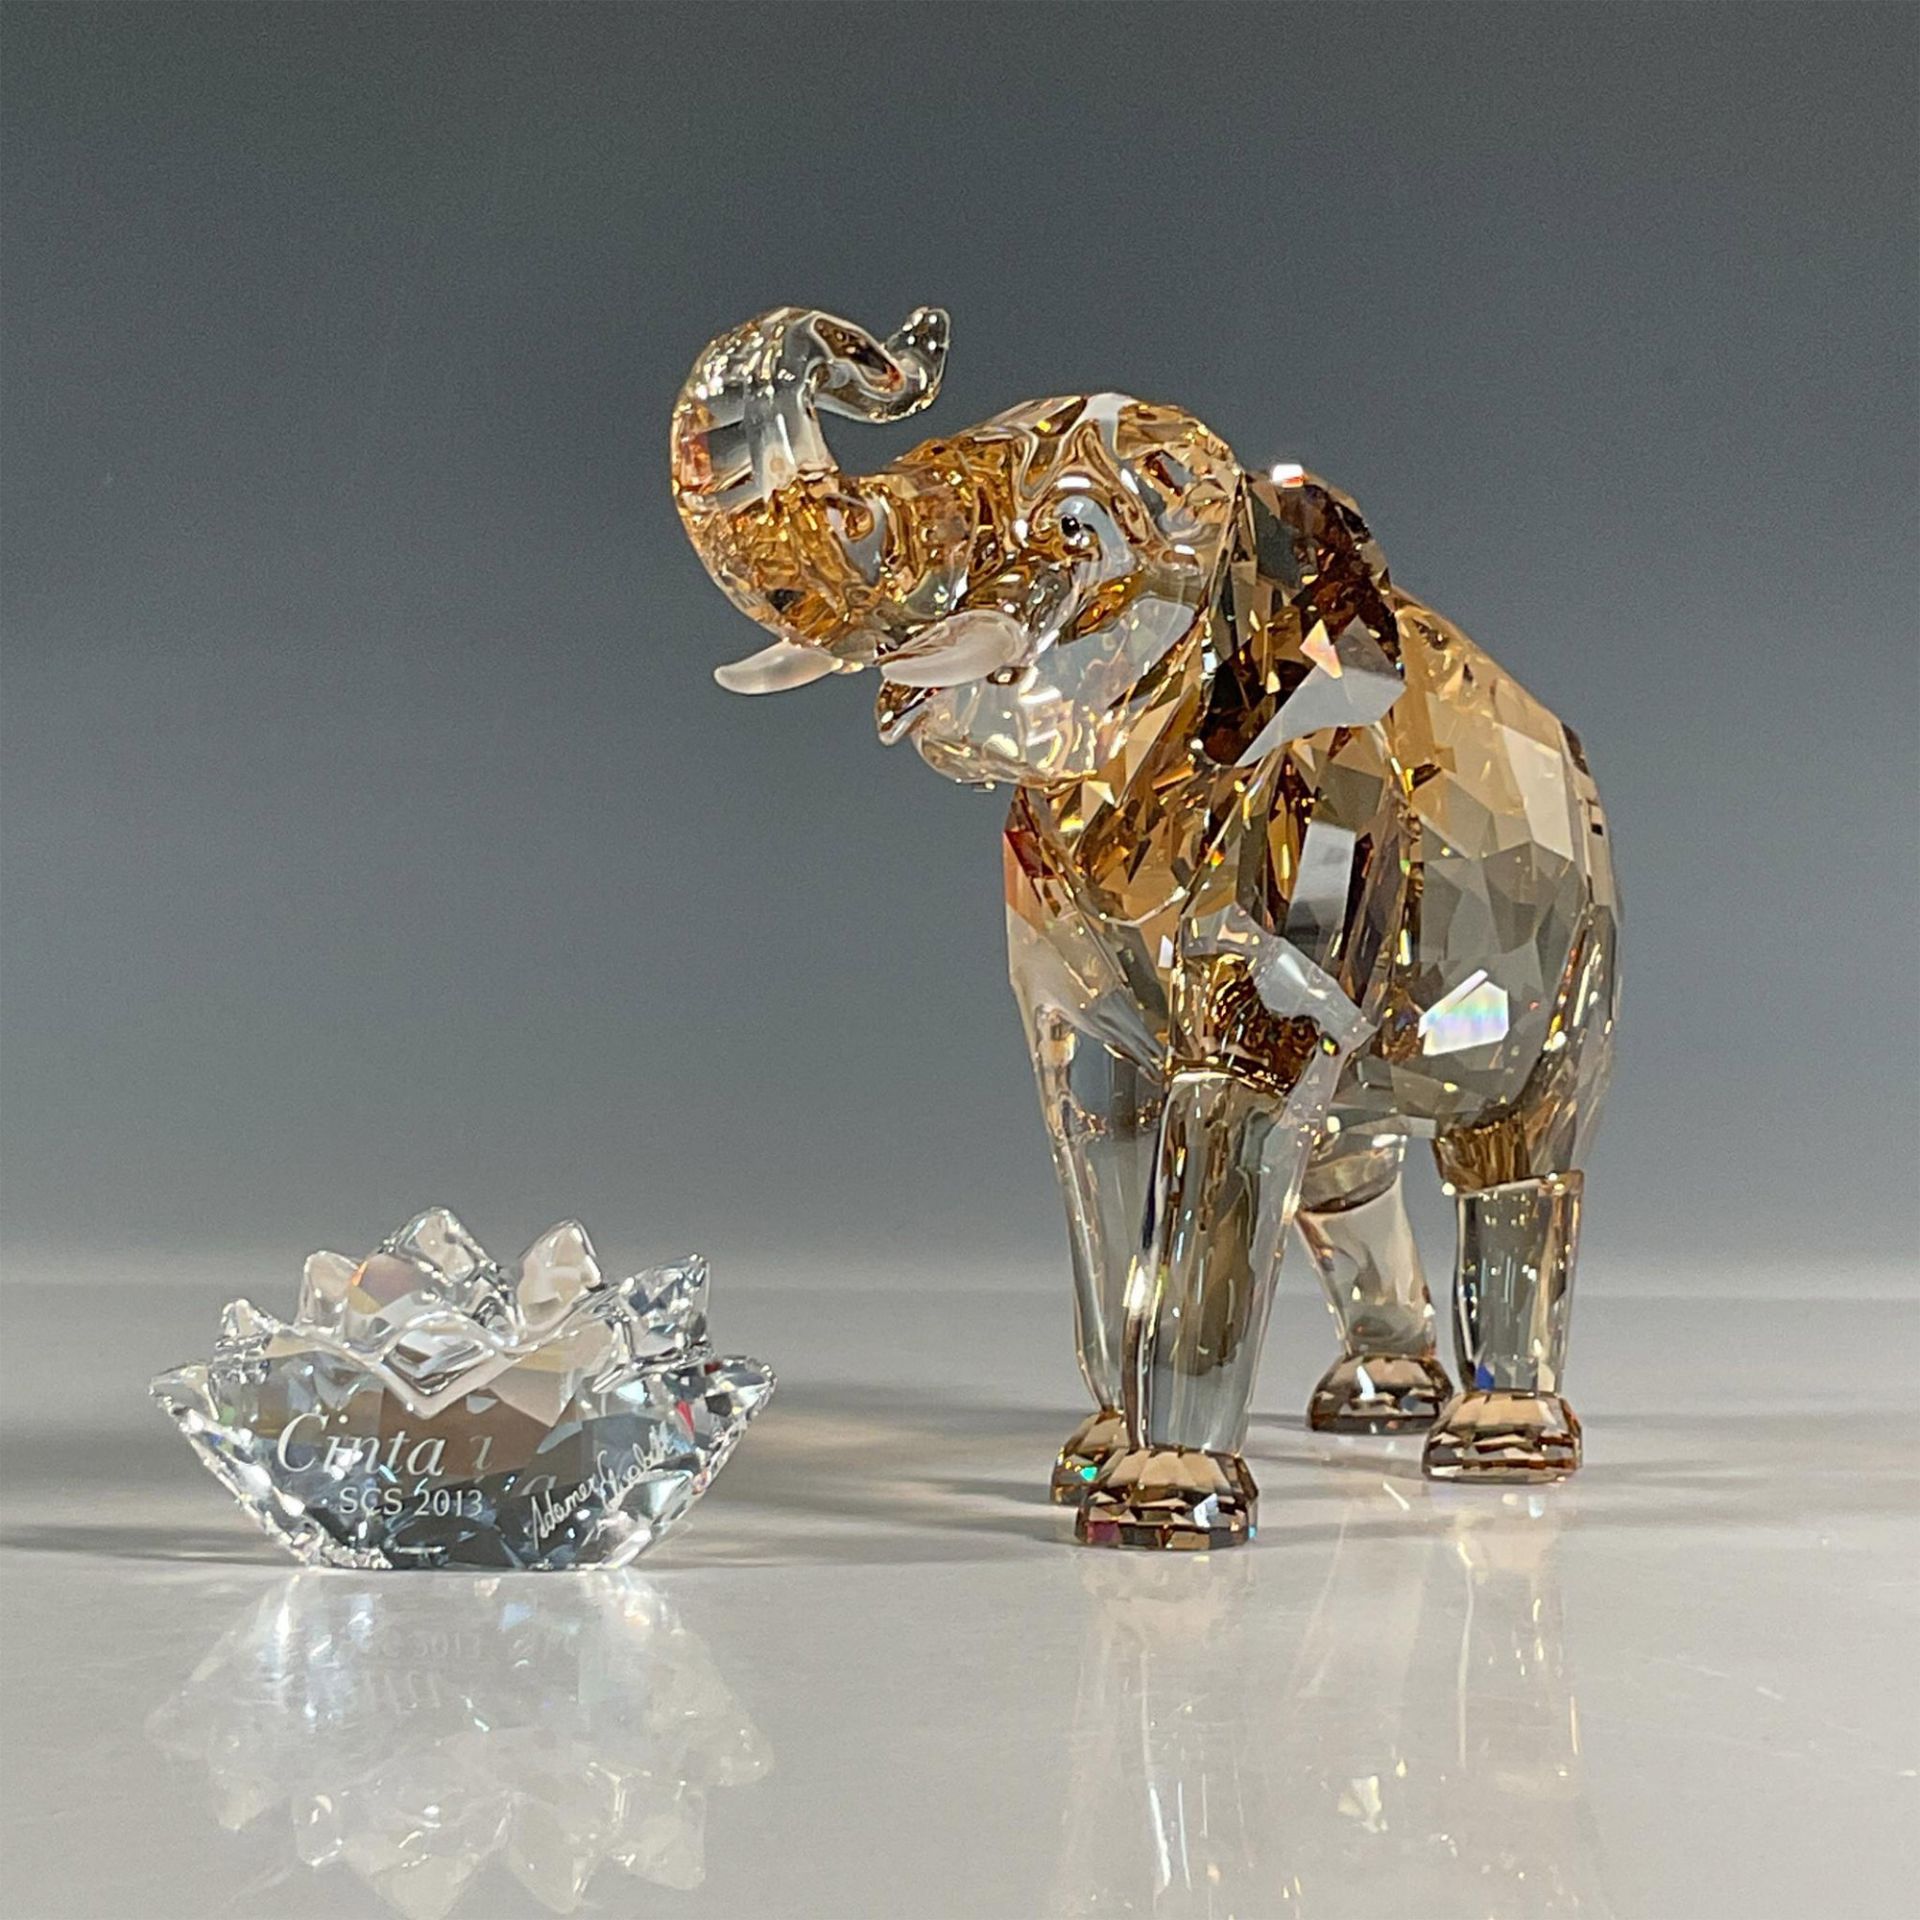 Swarovski Crystal Figurine with Plaque, Cinta the Elephant - Image 2 of 5